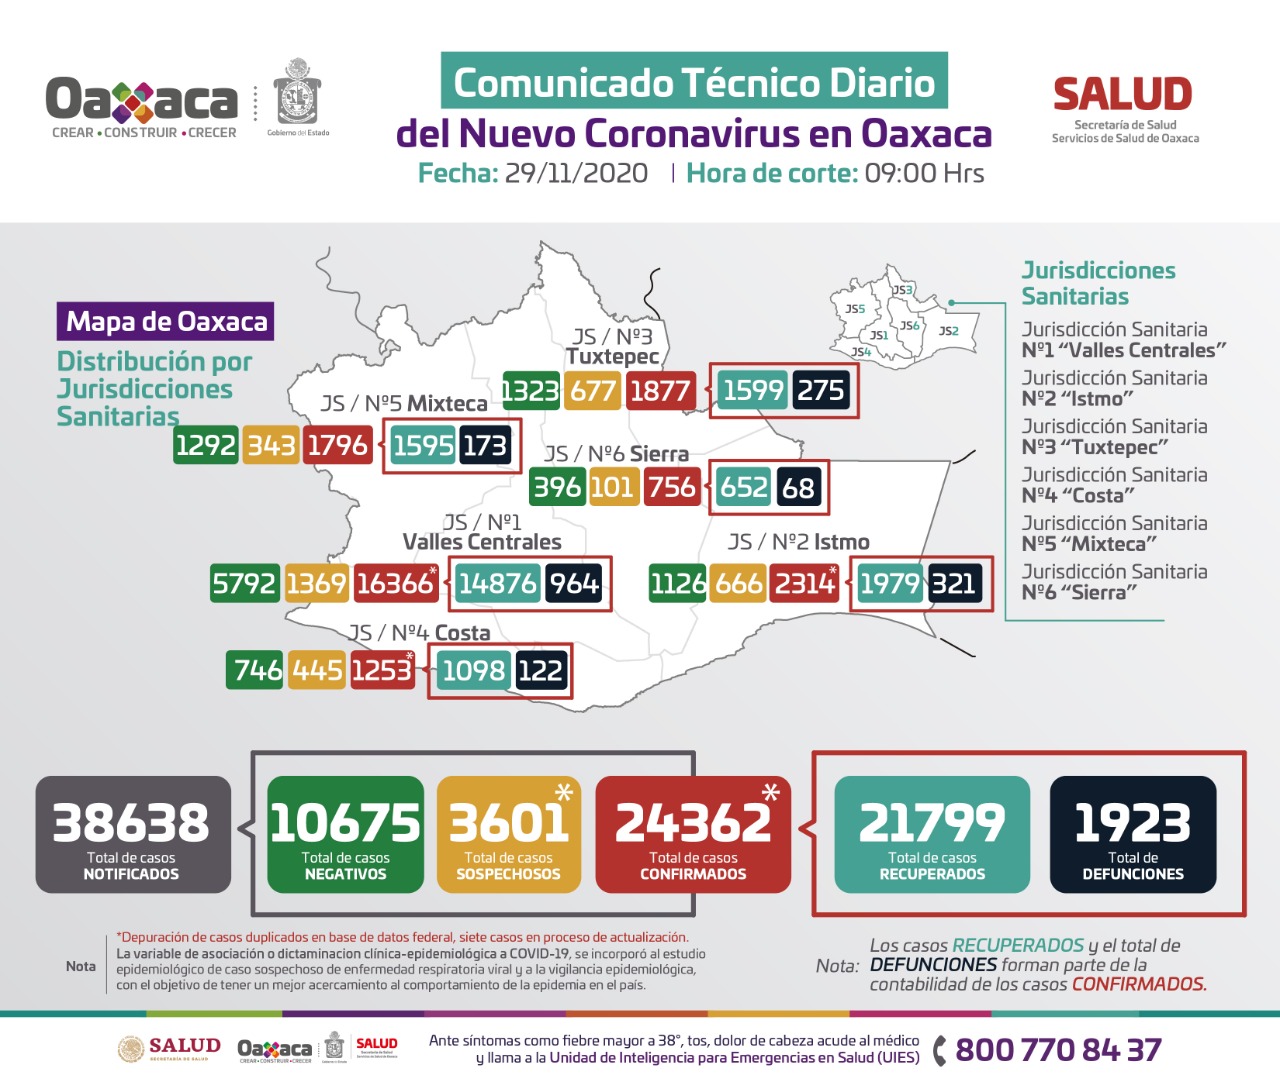 Suspenden en Oaxaca actividades eclesiásticas por pandemia de Covid-19: Casas Escamilla